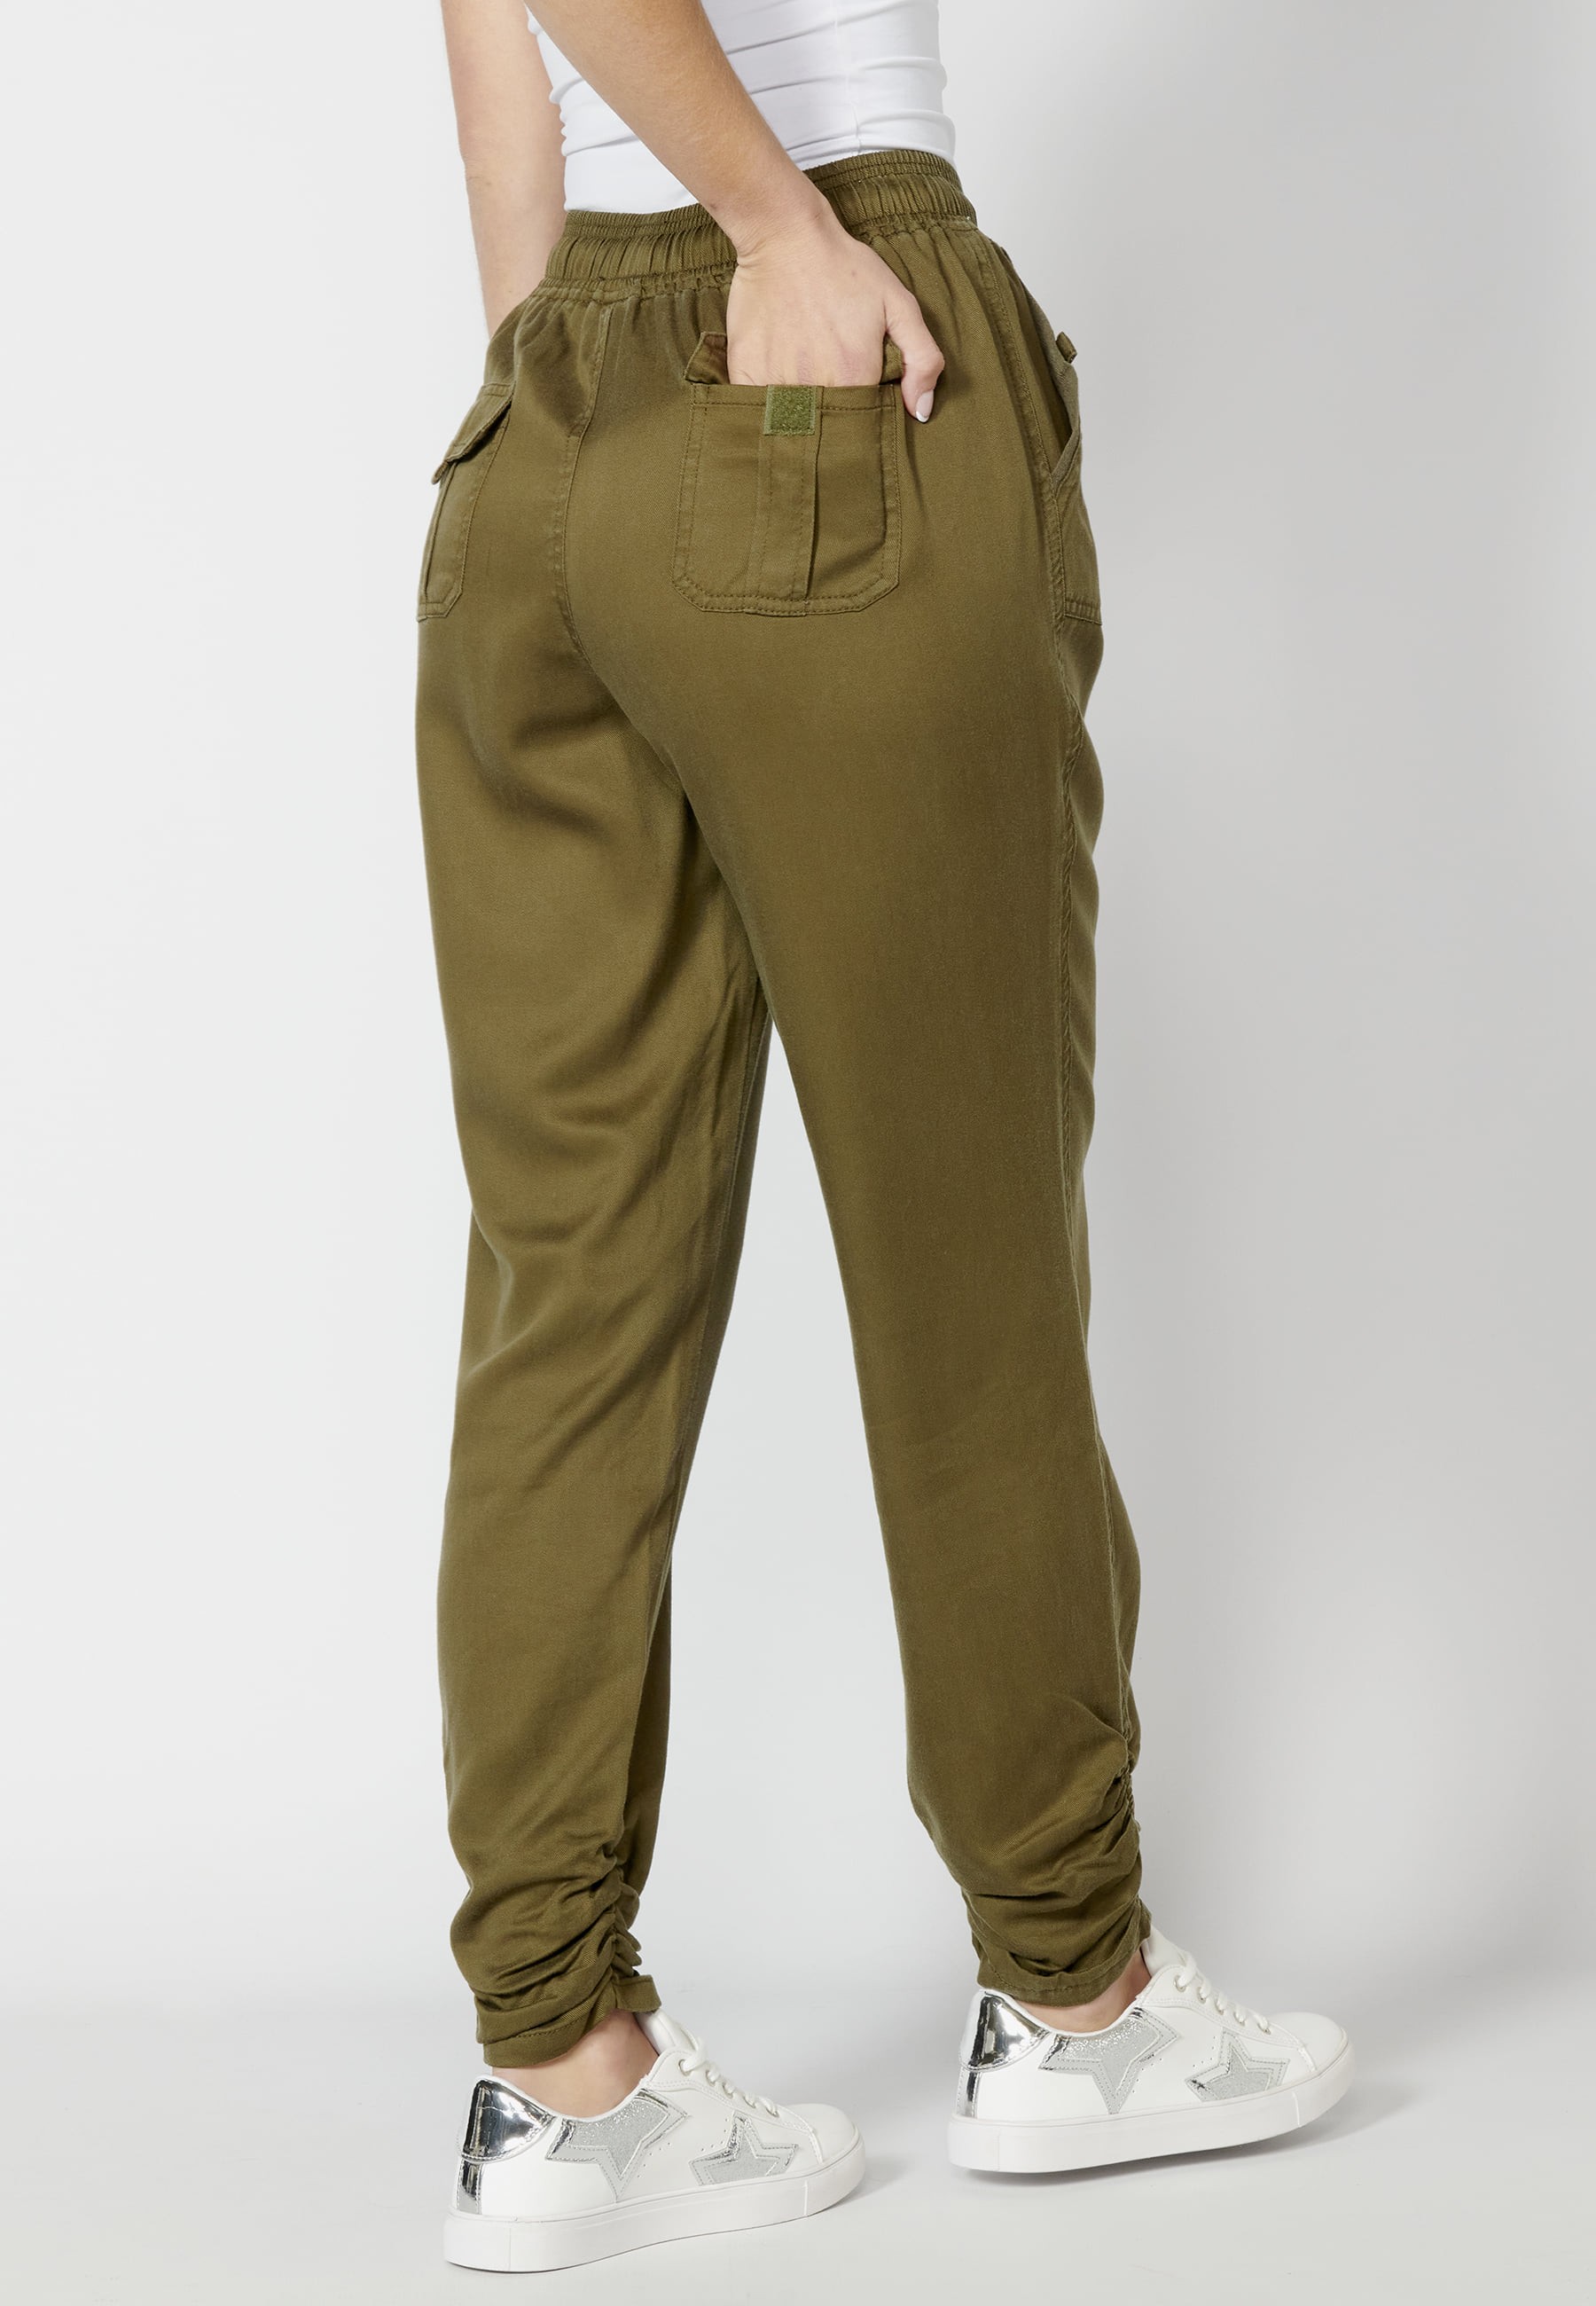 Long pants with adjustable waist Khaki color for Woman 2